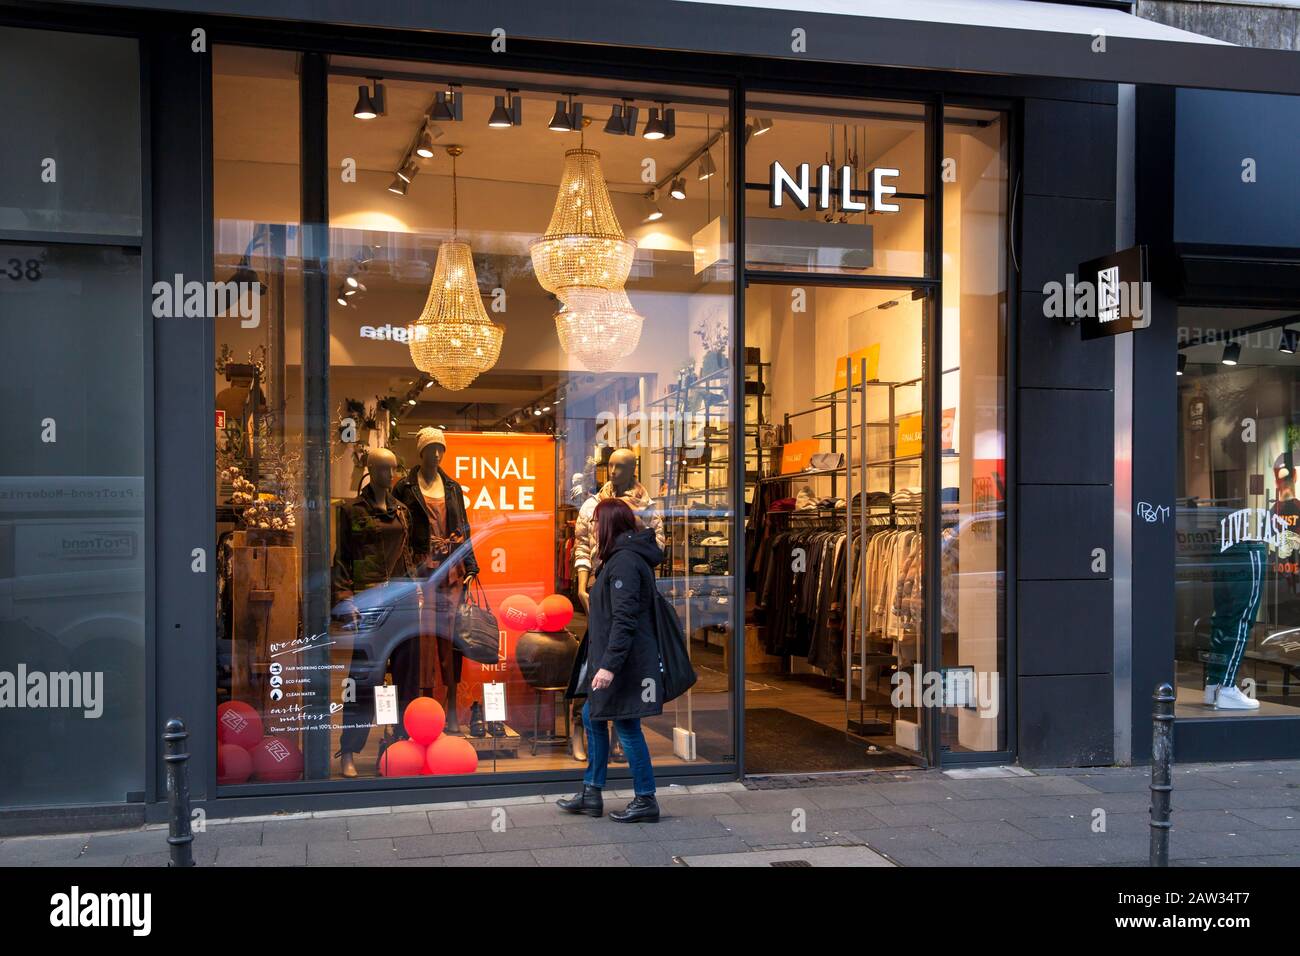 fashion store Nile on shopping street Ehrenstrasse, Cologne, Germany.  Modegeschaeft Nile in der Ehrenstrasse, Koeln, Deutschland. Stock Photo